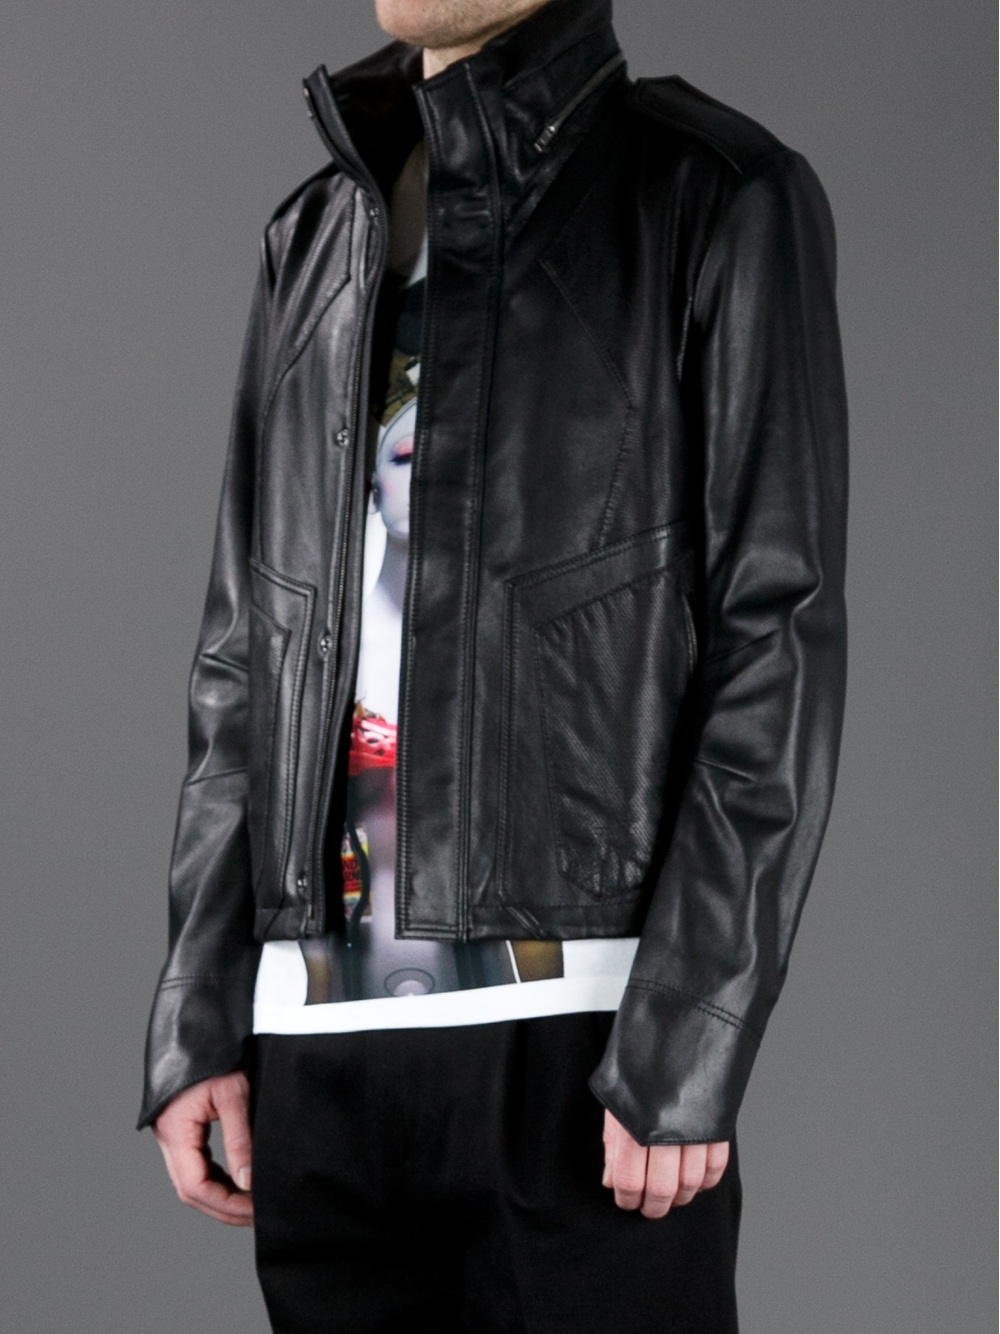 Juun.J Leather Jacket in Black for Men - Lyst